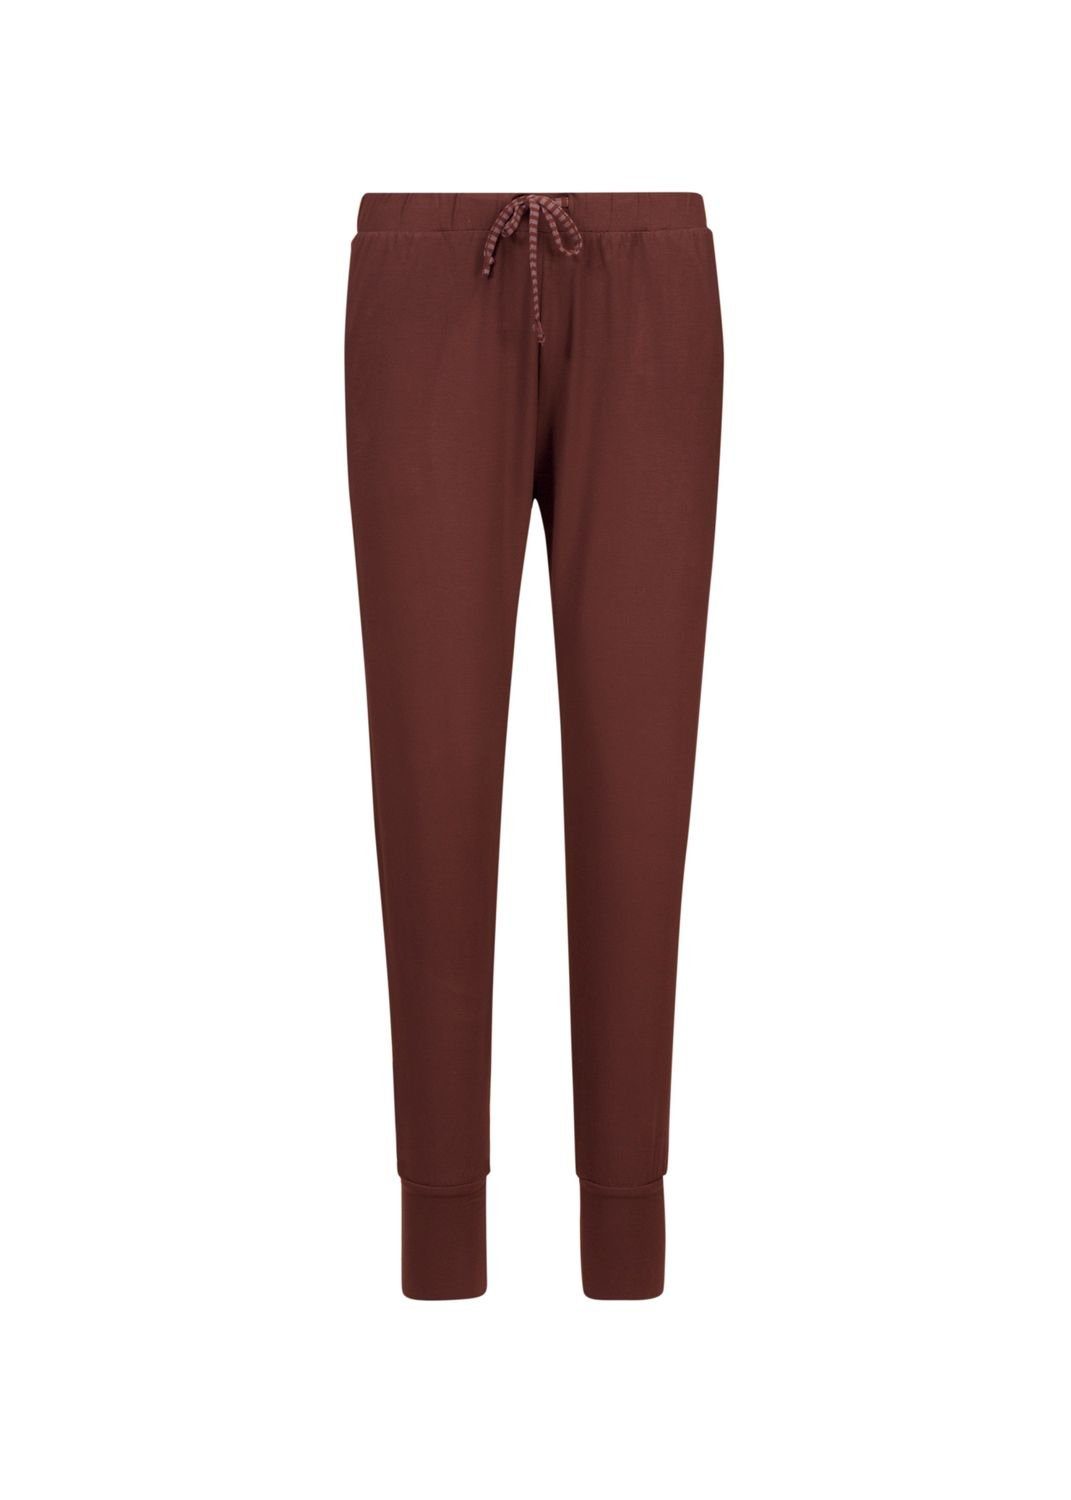 PiP Studio Schlafanzug PiP Studio Long Damen Bobien lange Pyjamahose Schlafhose Sleepwear Brown-Red Trouserr Loungewear